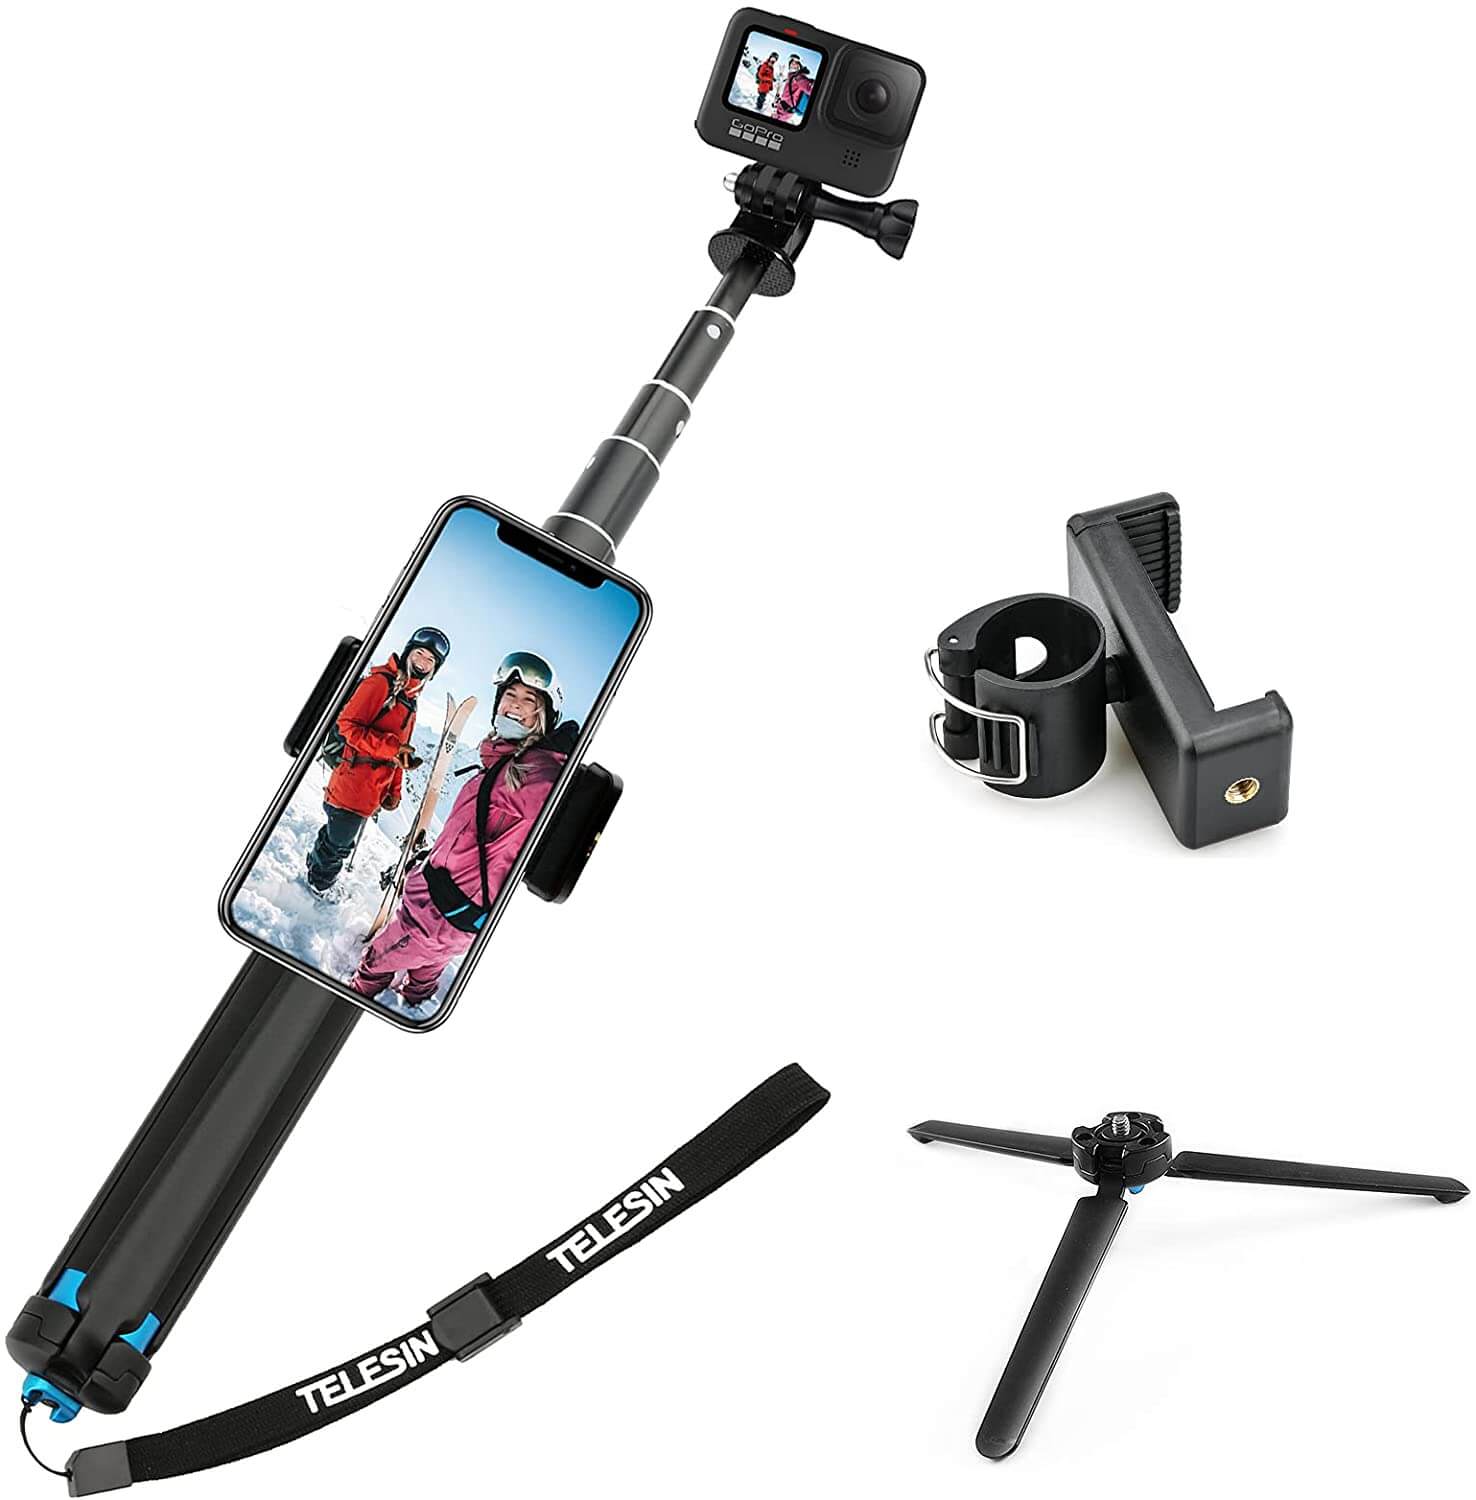 AFAITH Upgraded Selfie Stick